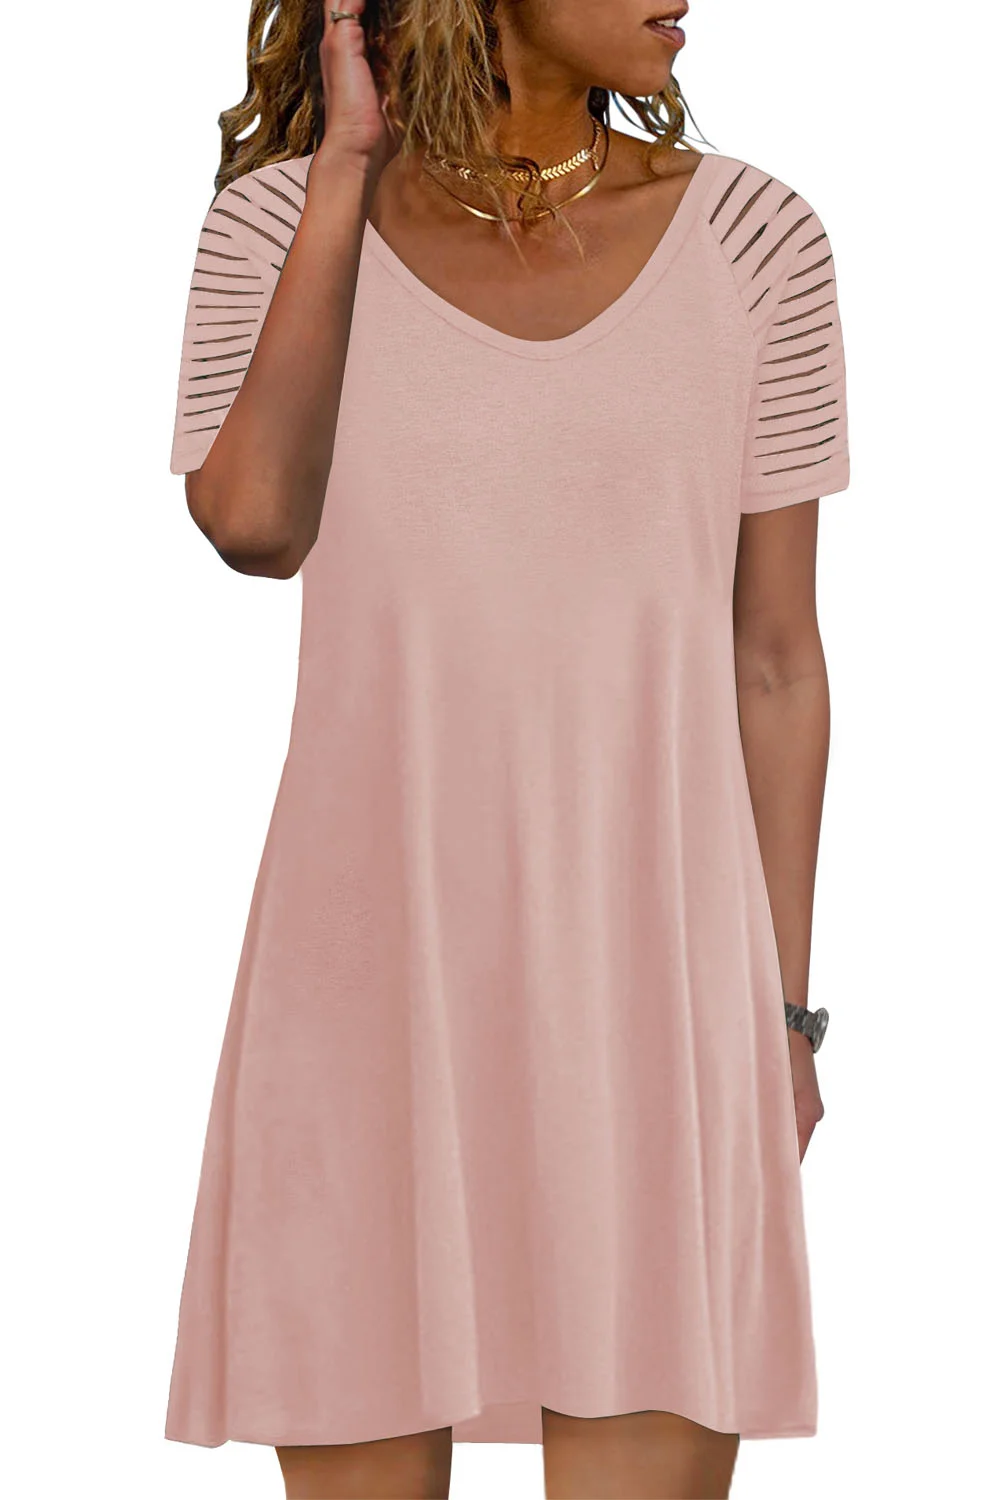 Pink Sheer Striped Short Sleeve Flare T-shirt Mini Dress